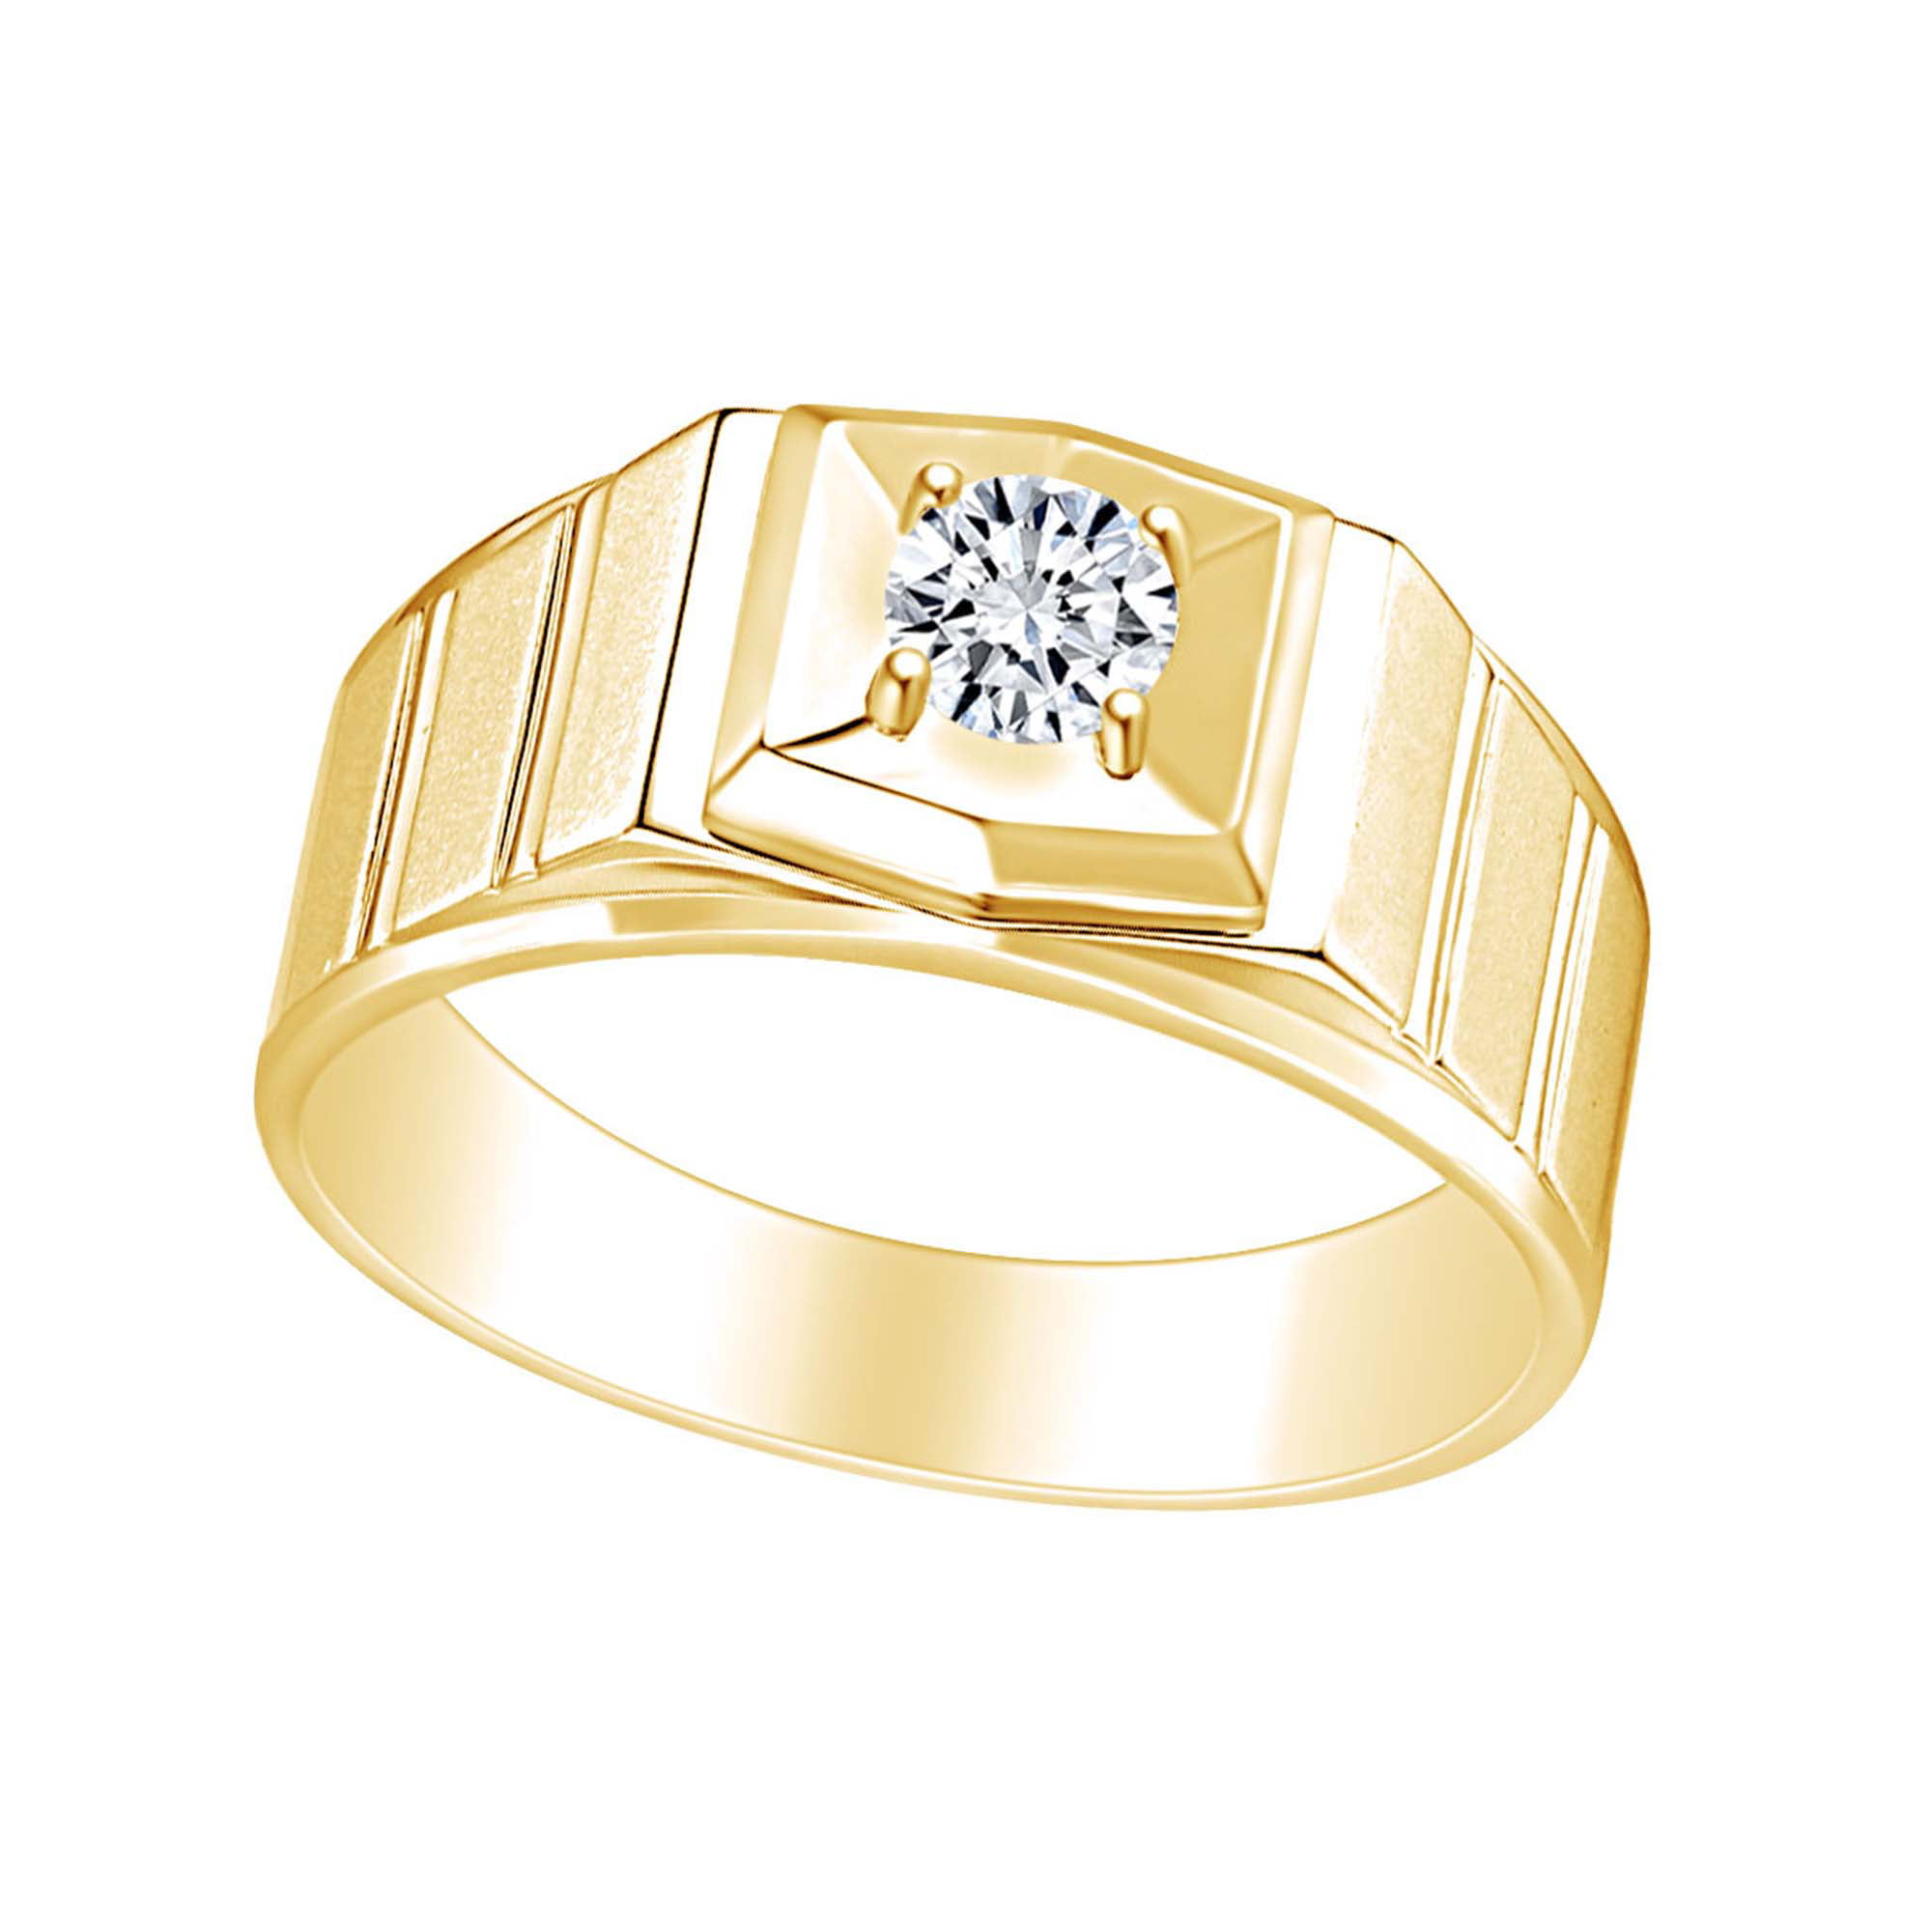 Buy Modani 14K Yellow Gold Diamond Men's Ring (Size 10.0) 6.70 Grams 1.10  ctw at ShopLC.